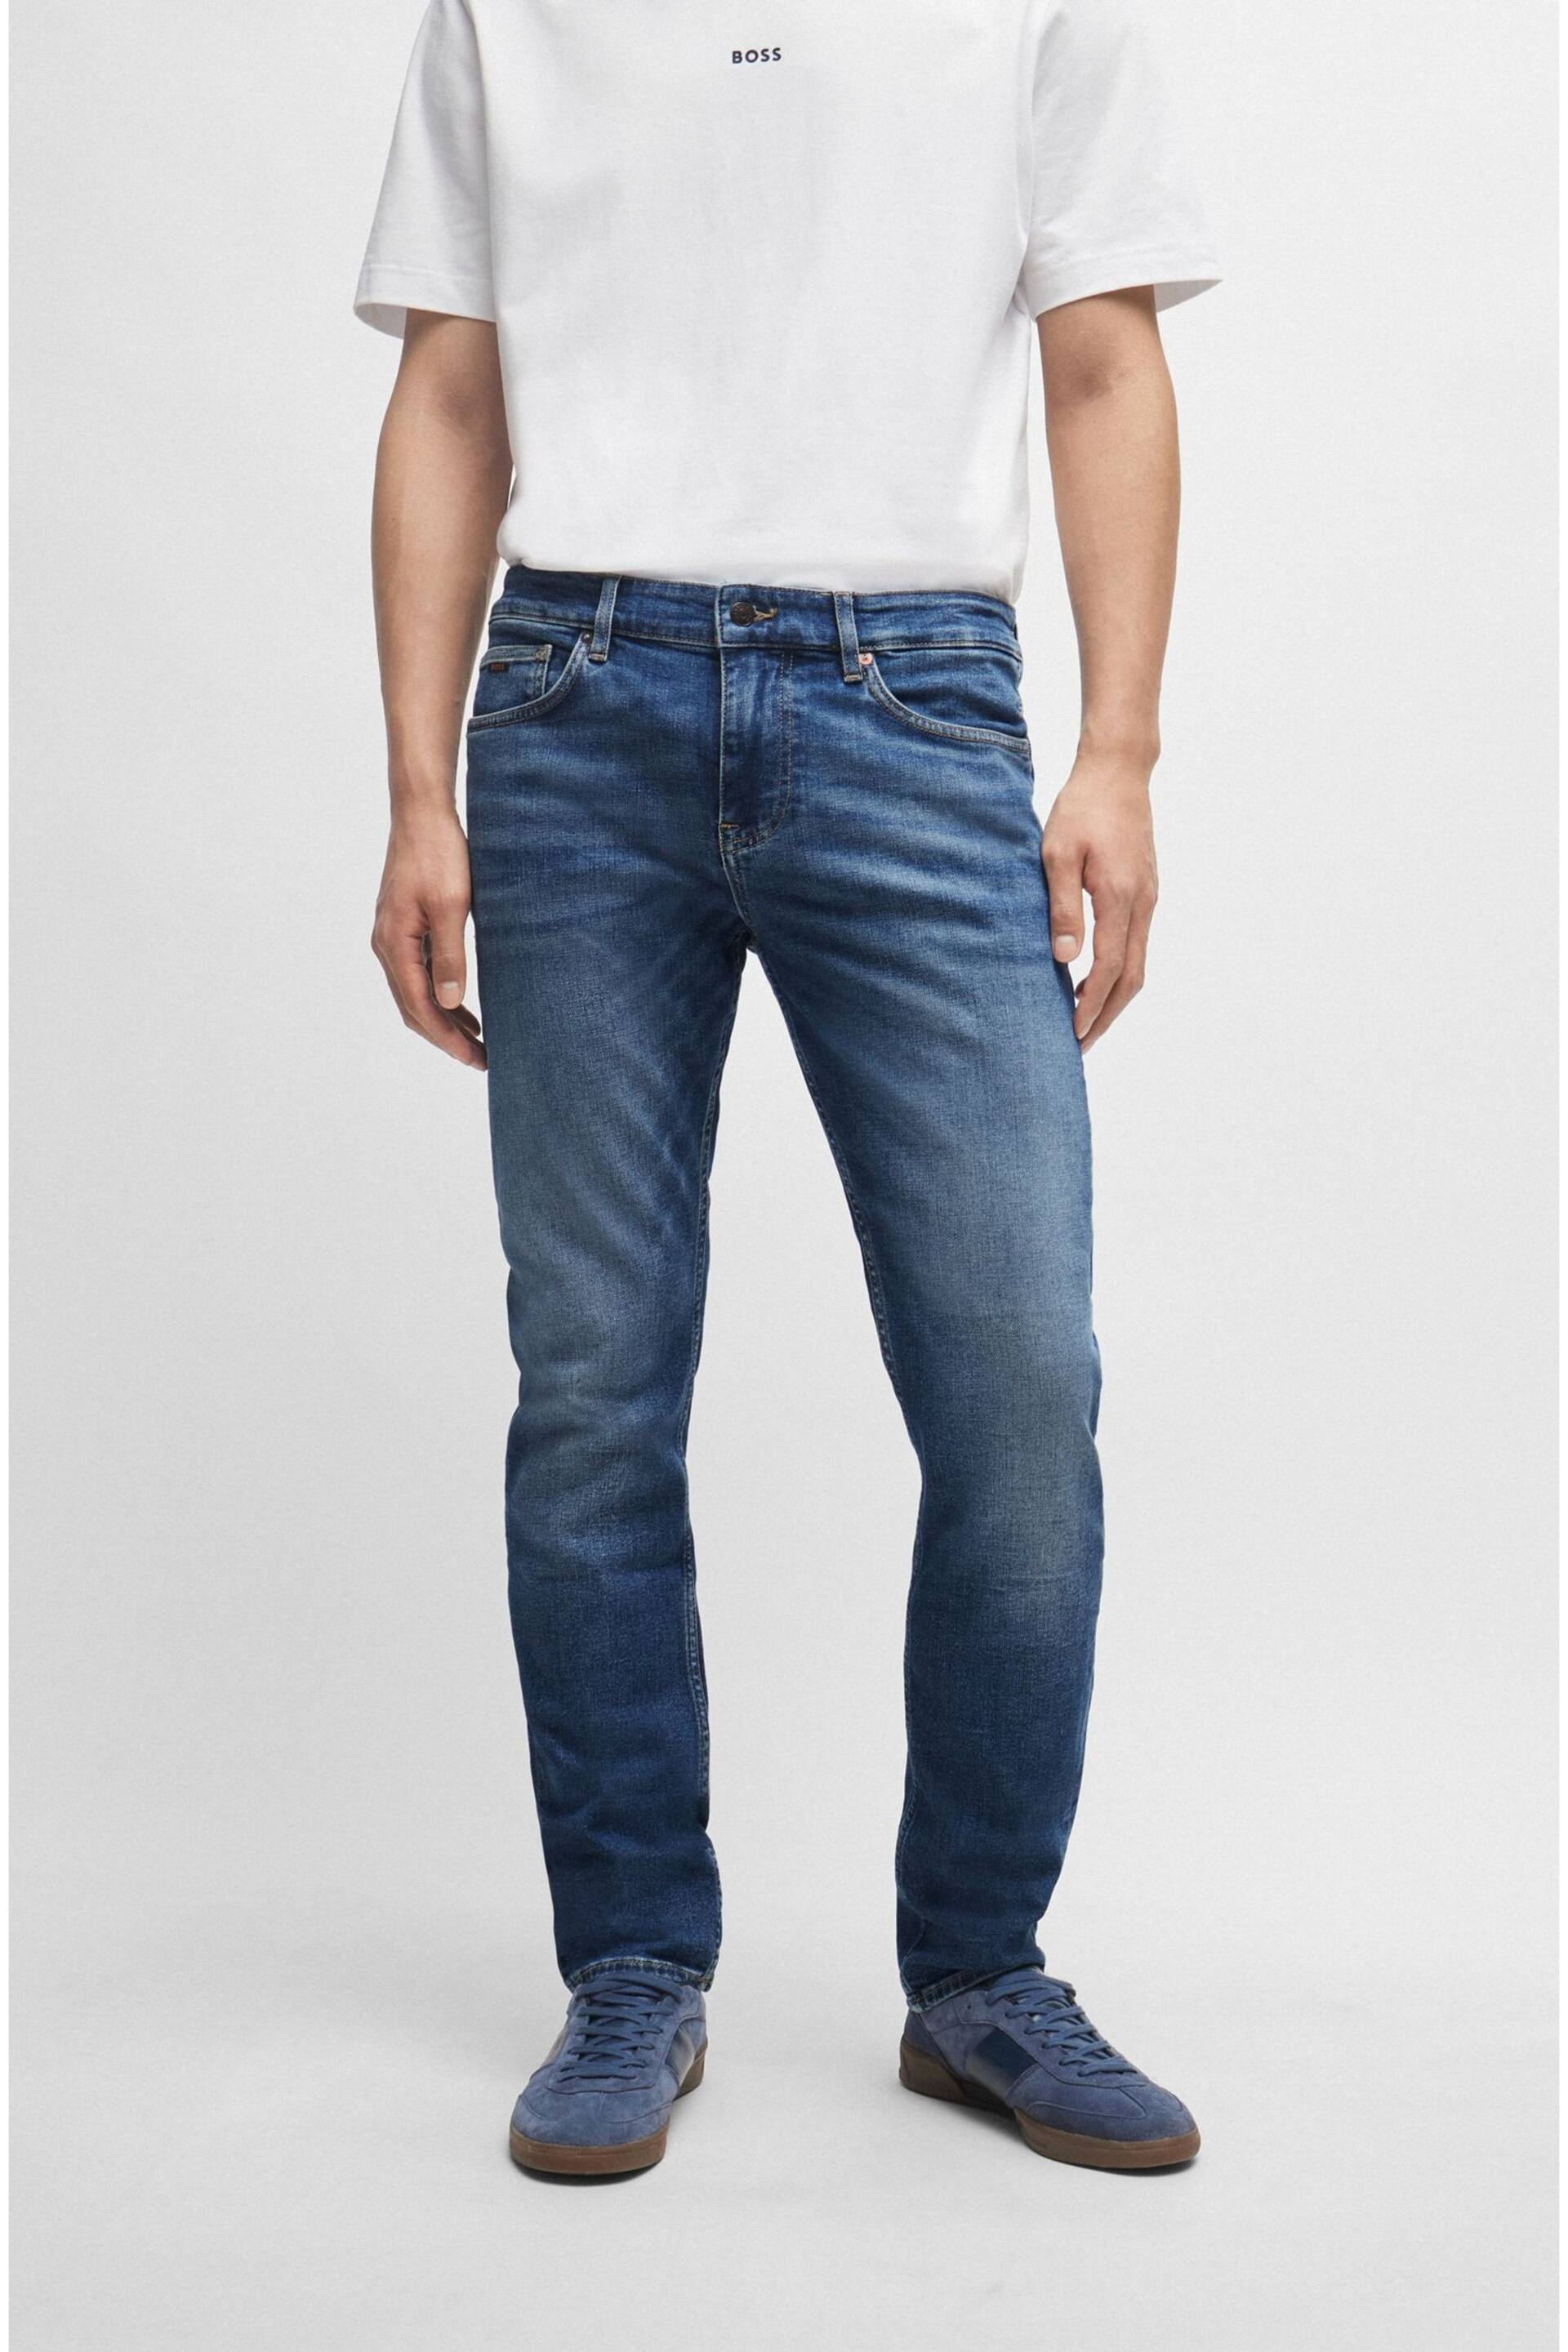 BOSS Mid Blue Slim Fit Comfort Stretch Denim Jeans - Image 1 of 5